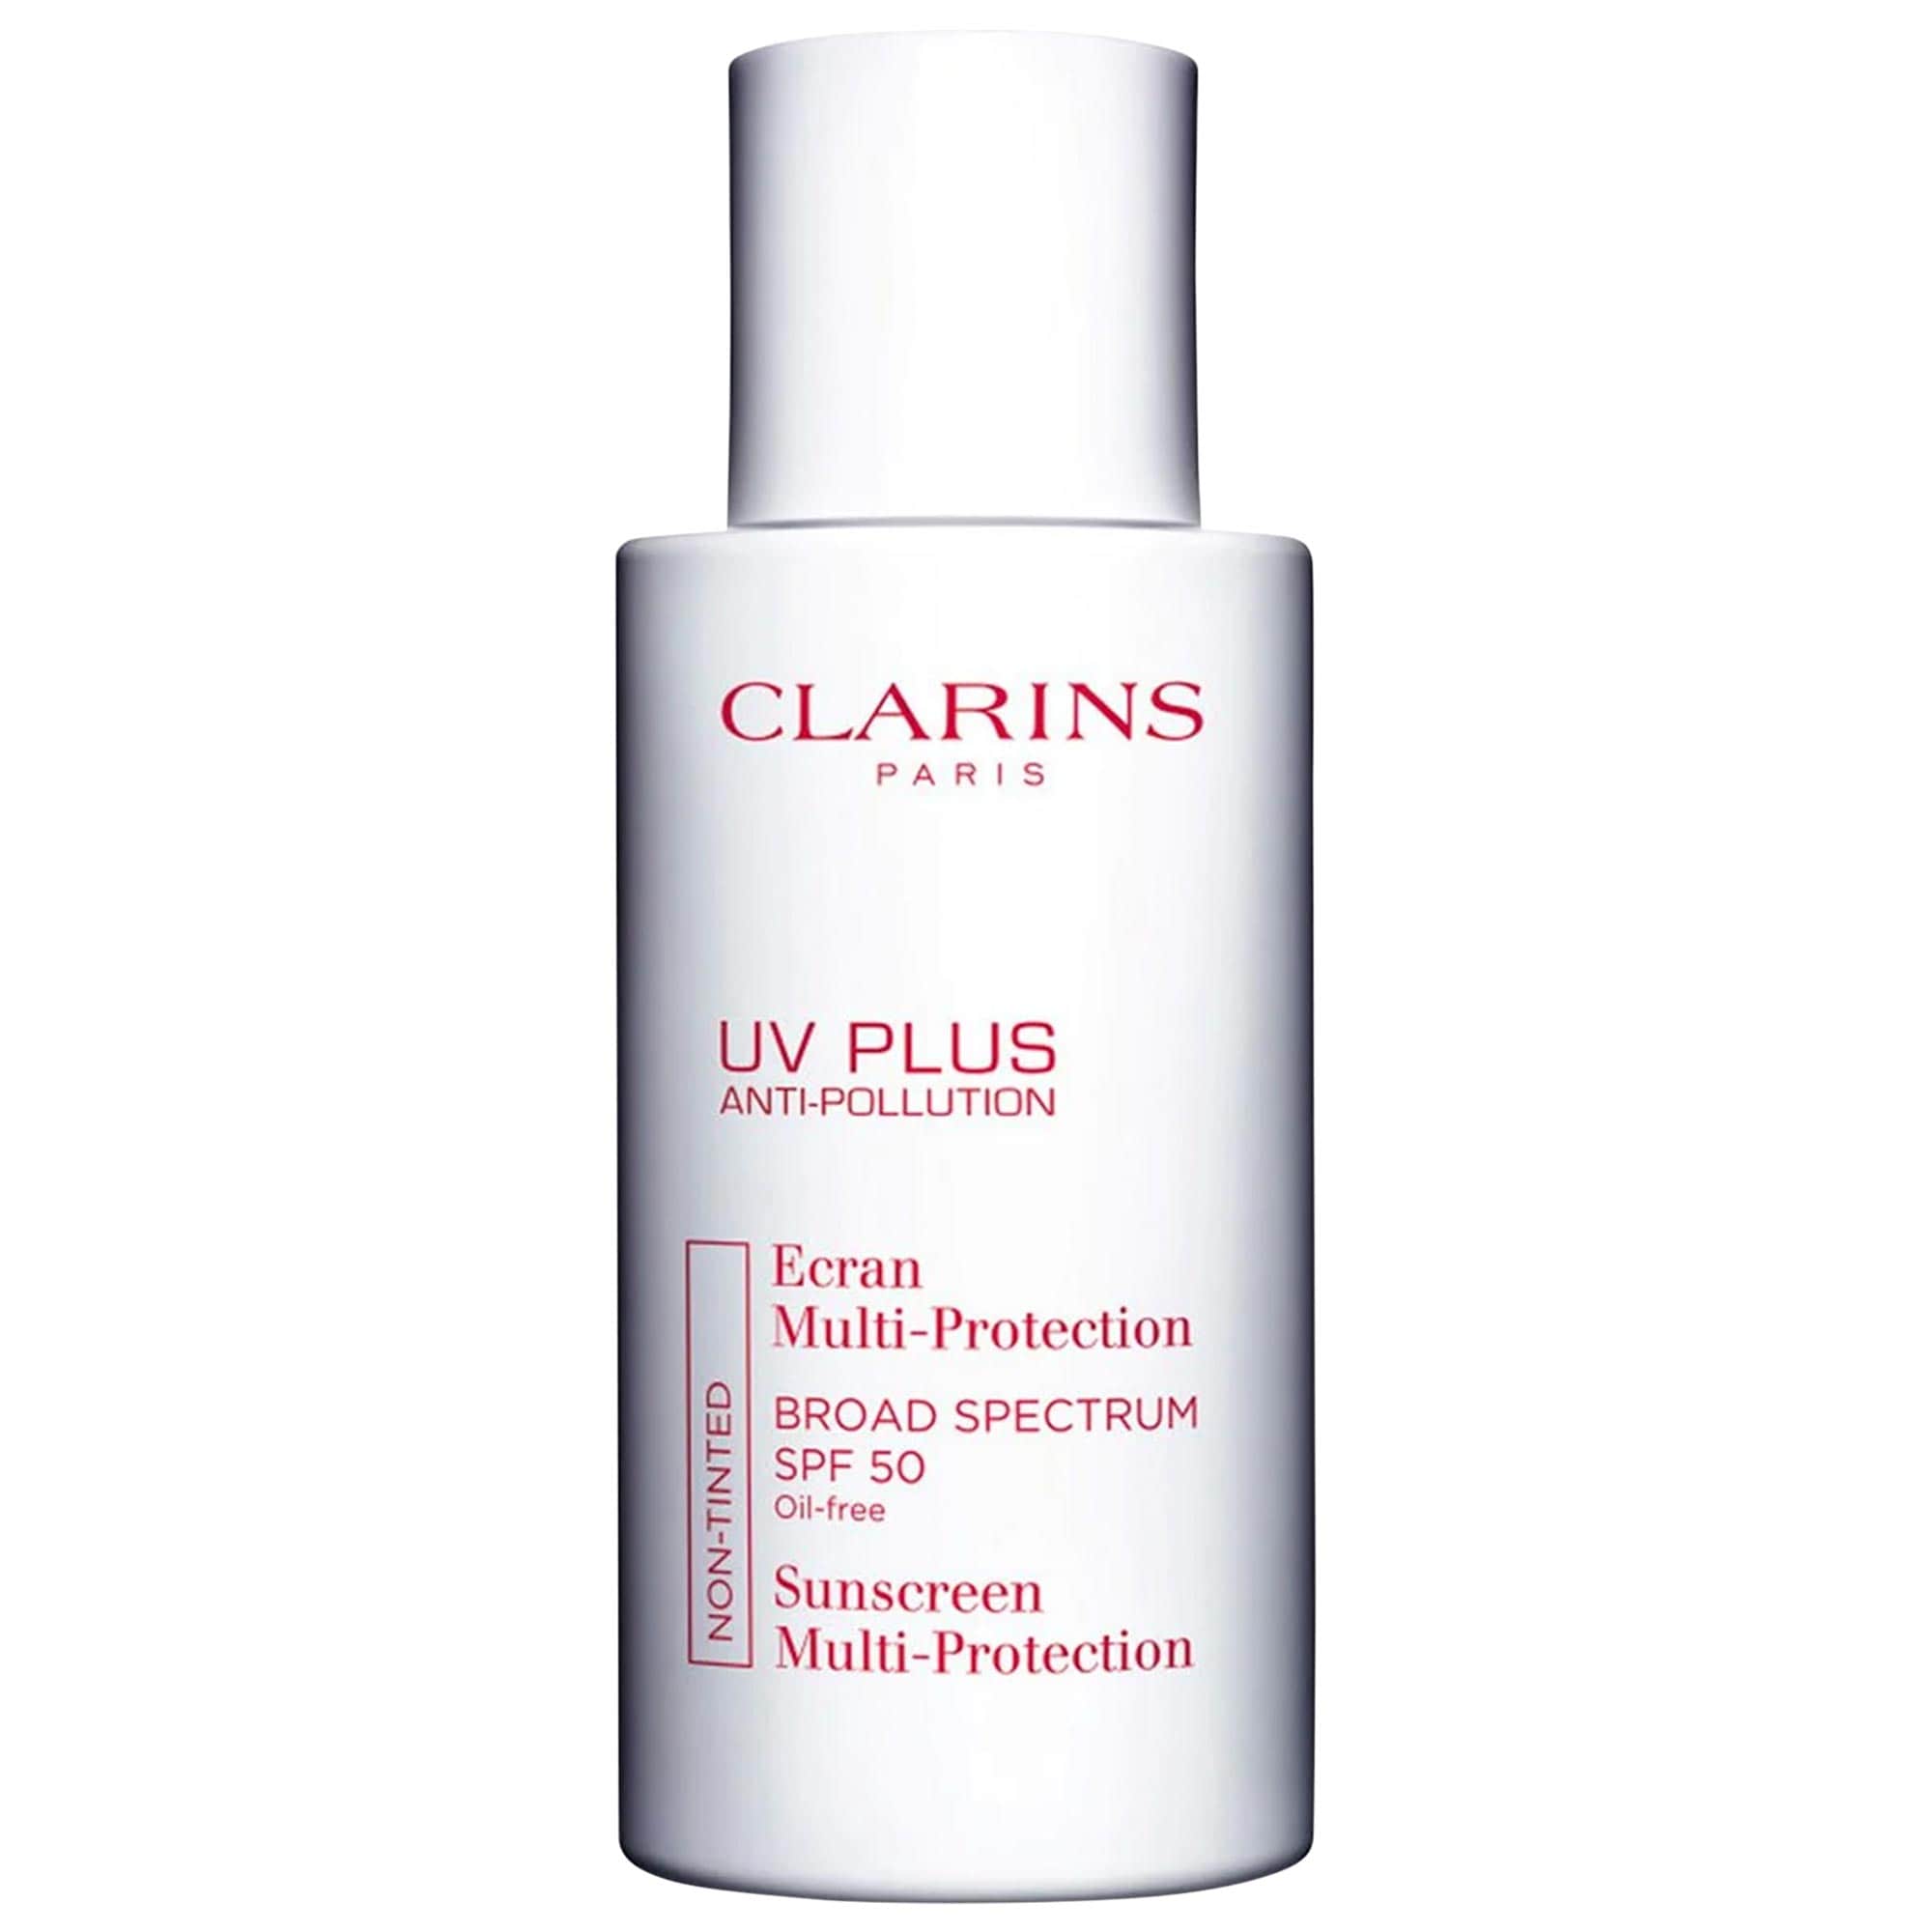 UV Plus Anti-Pollution Antioxidant Face Sunscreen SPF 50 Clarins